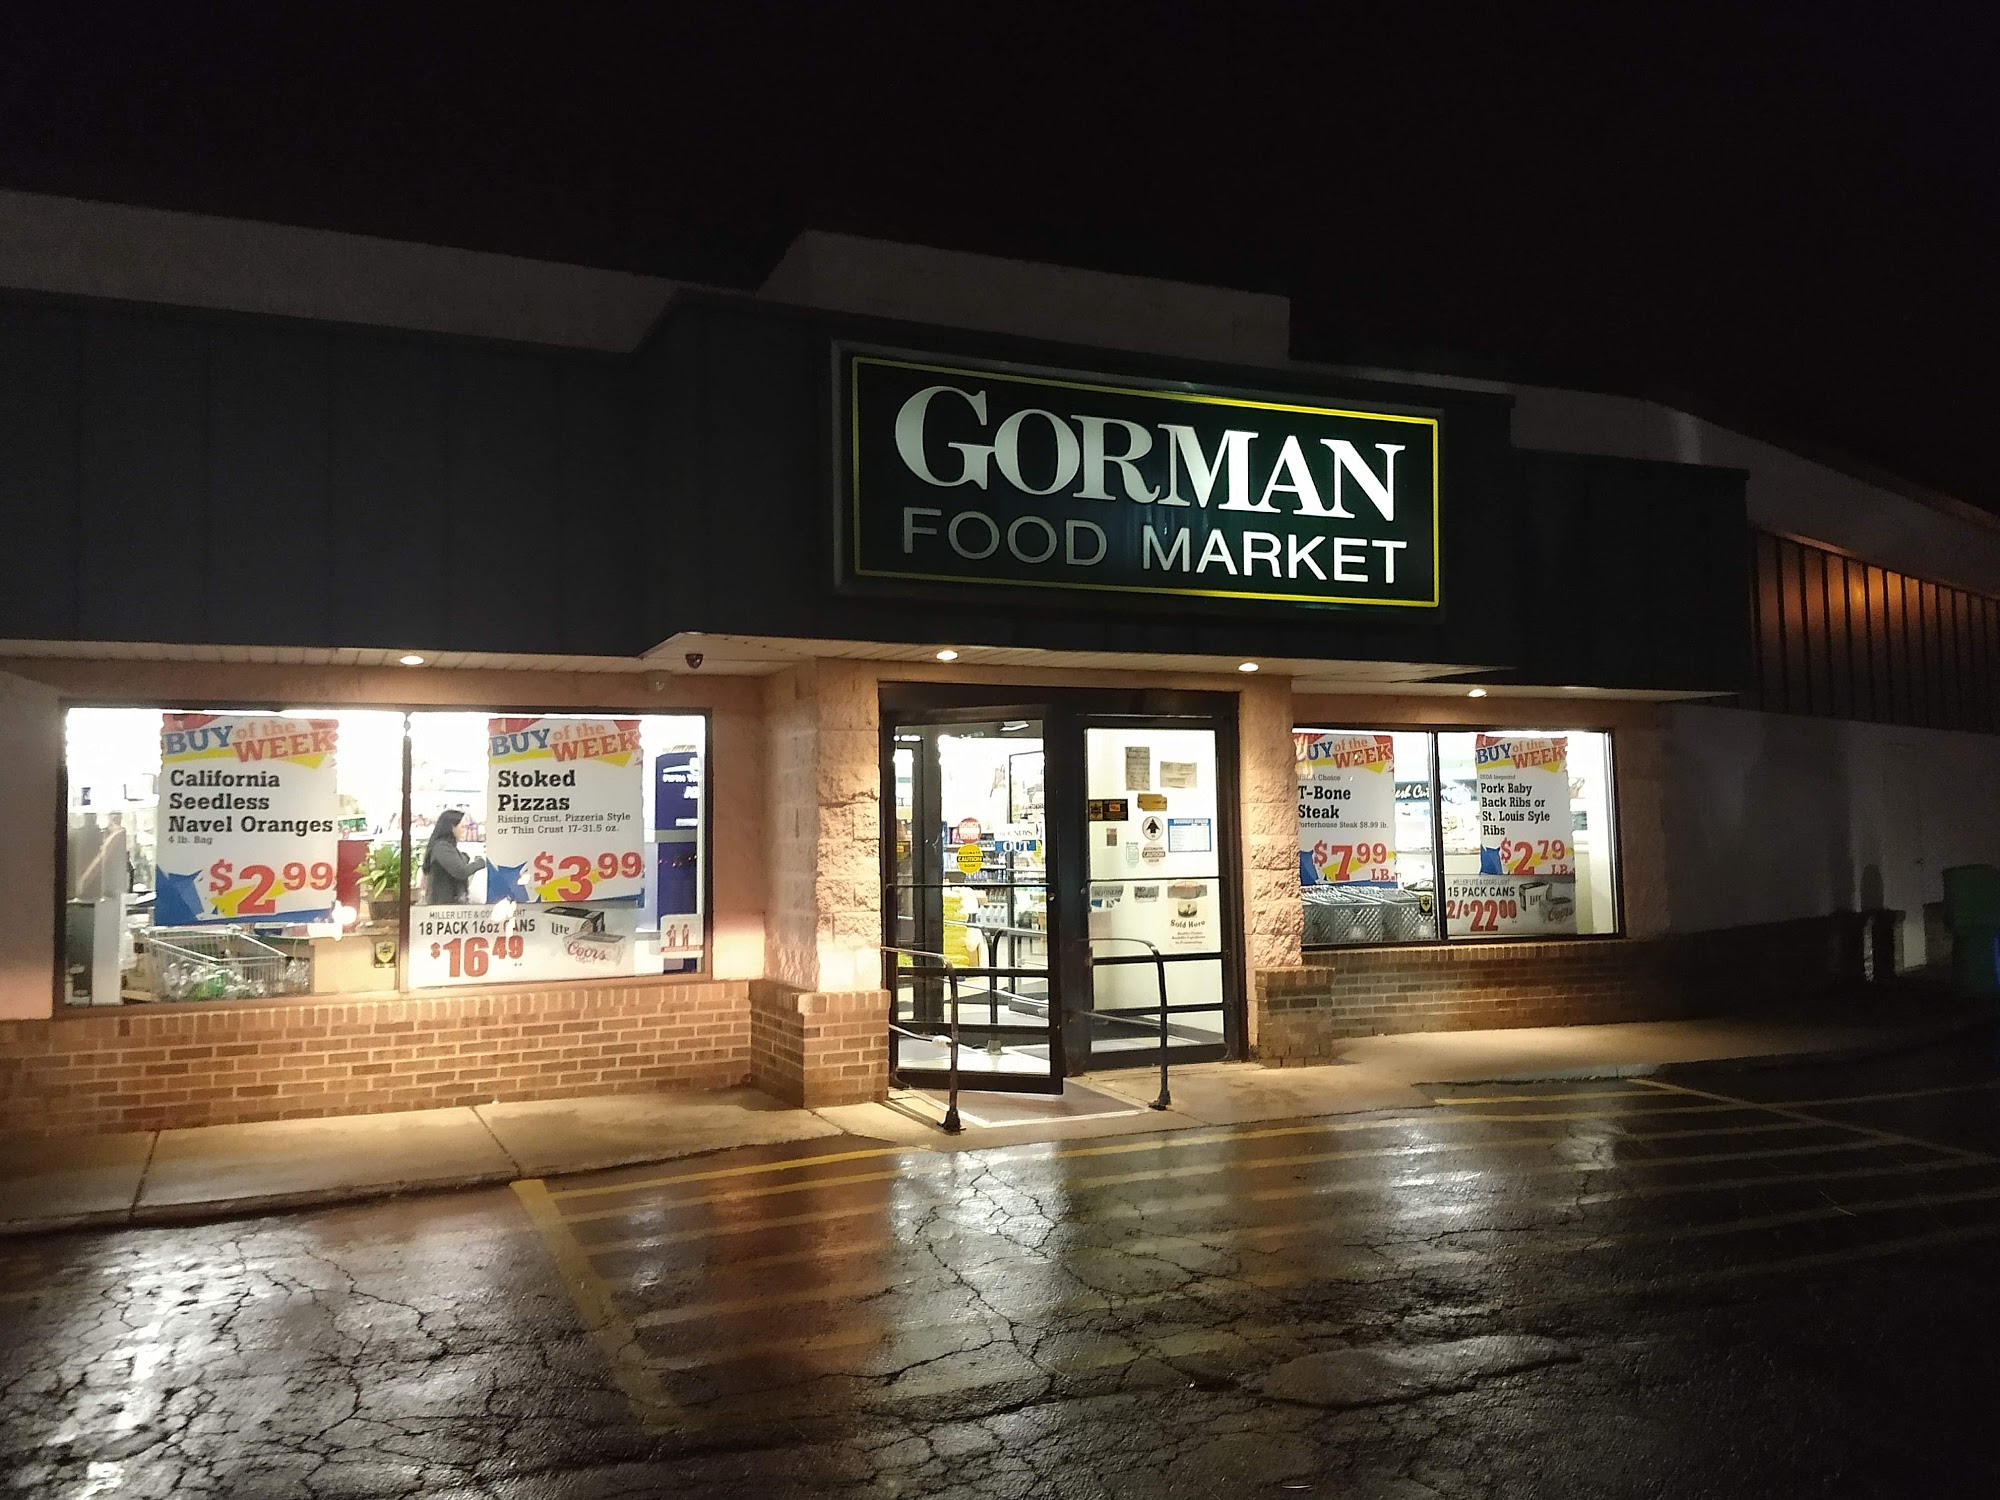 Gorman's Food Market